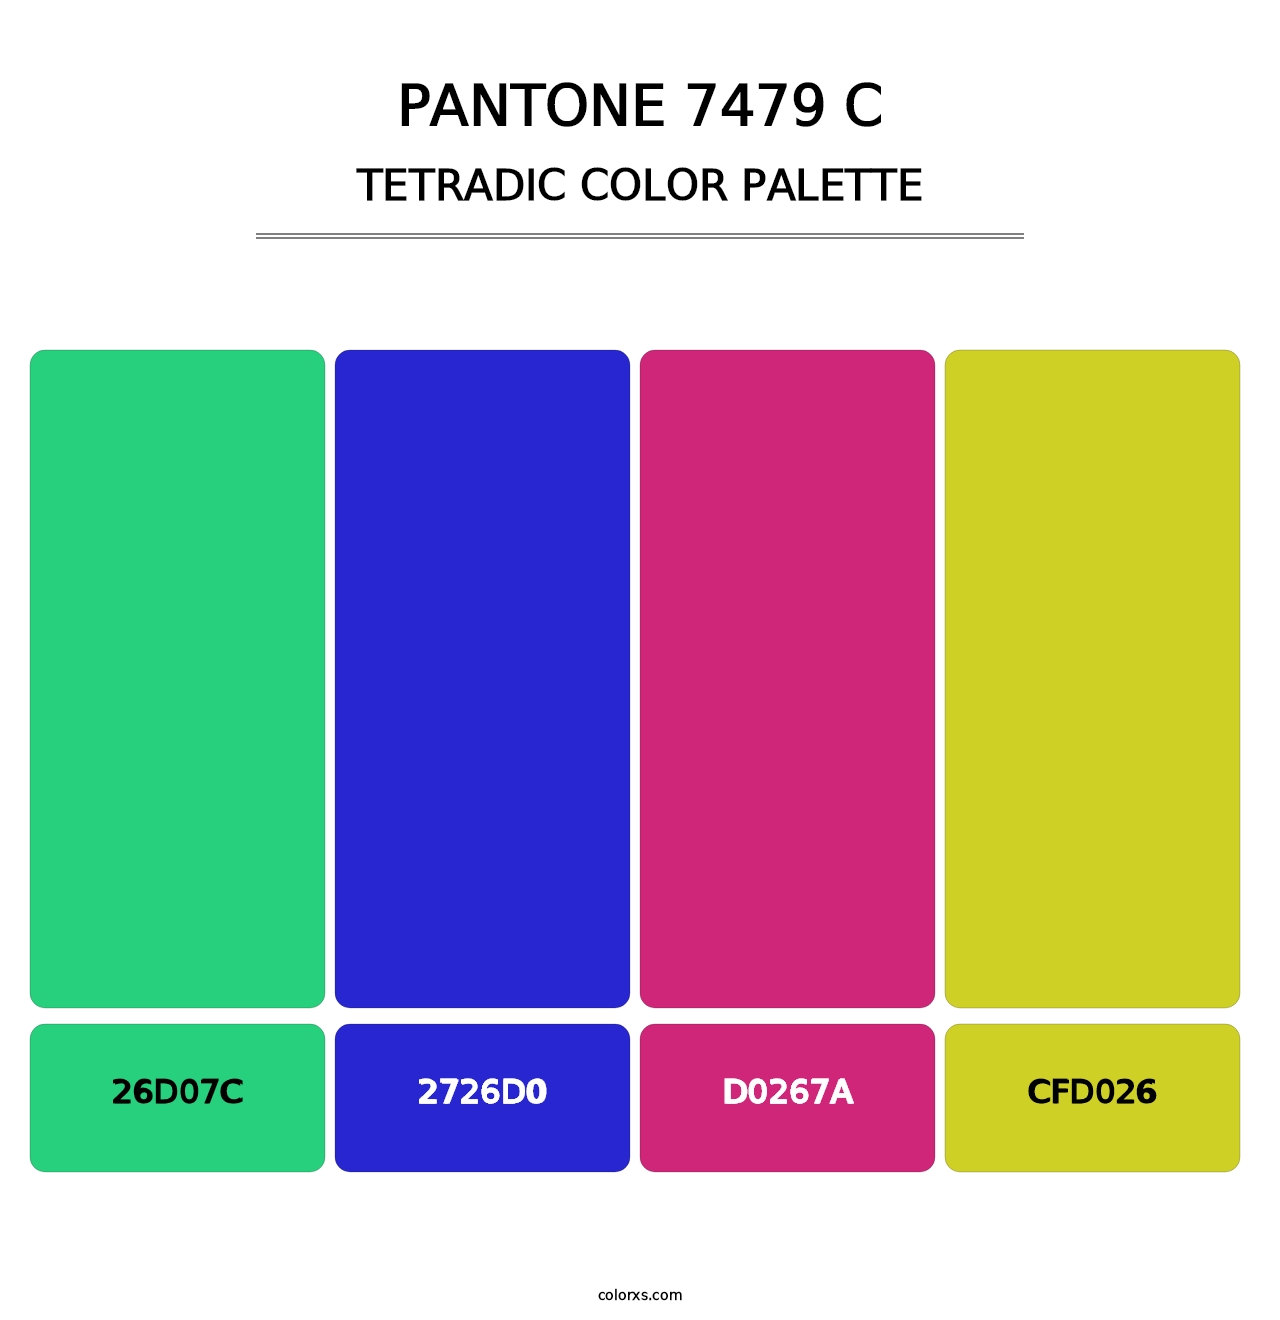 PANTONE 7479 C - Tetradic Color Palette